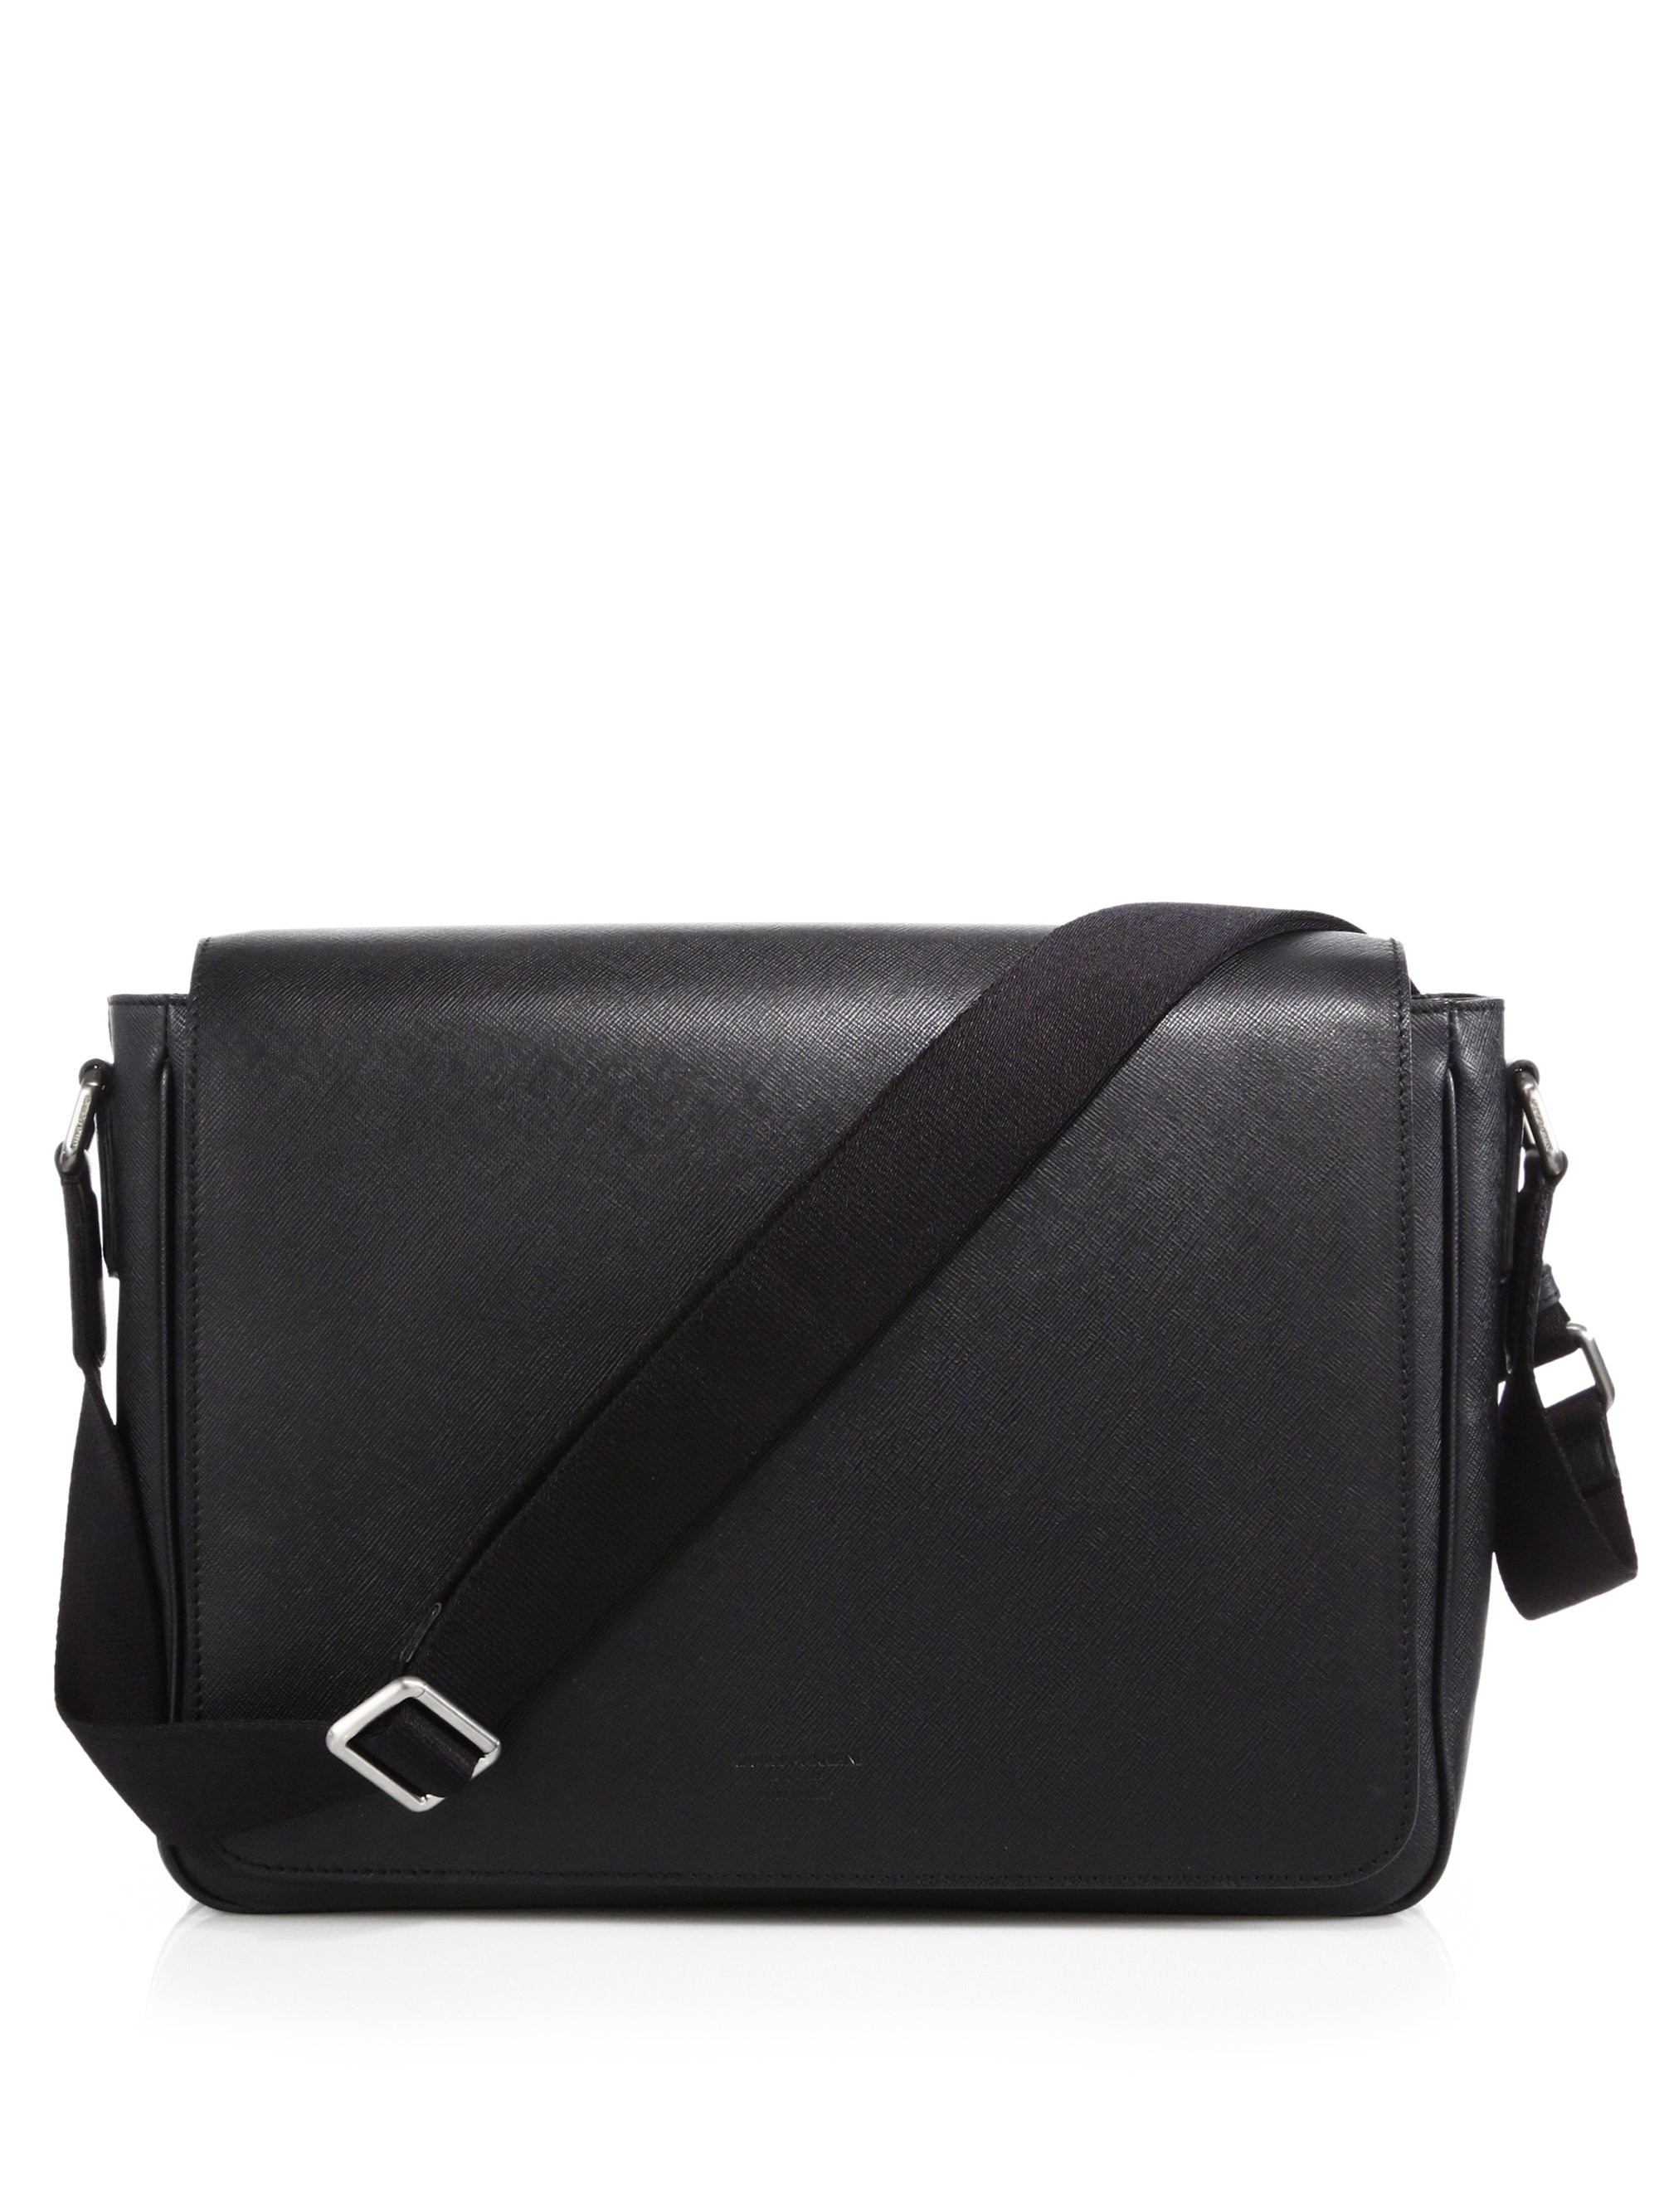 Giorgio armani Leather Messenger Bag in Black for Men | Lyst